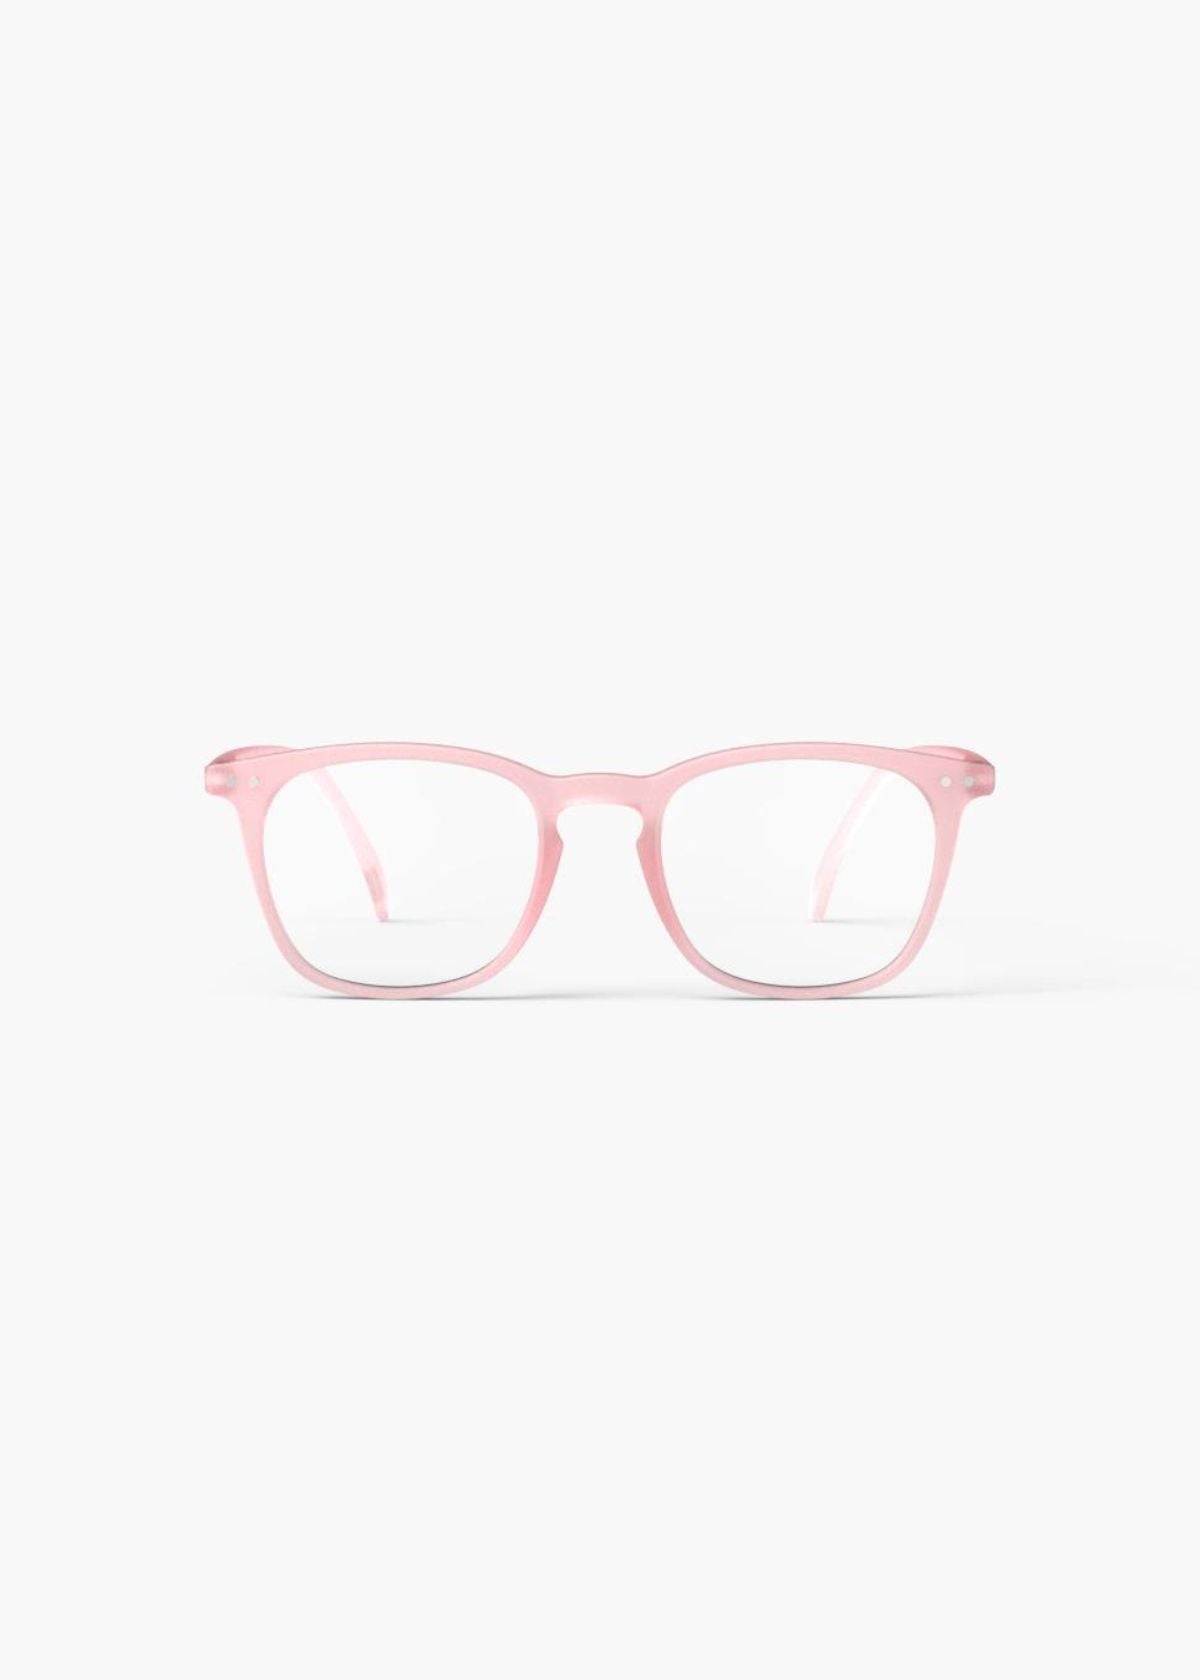 IZIPIZI Trapezium Shaped Reading Glasses #E in Pink